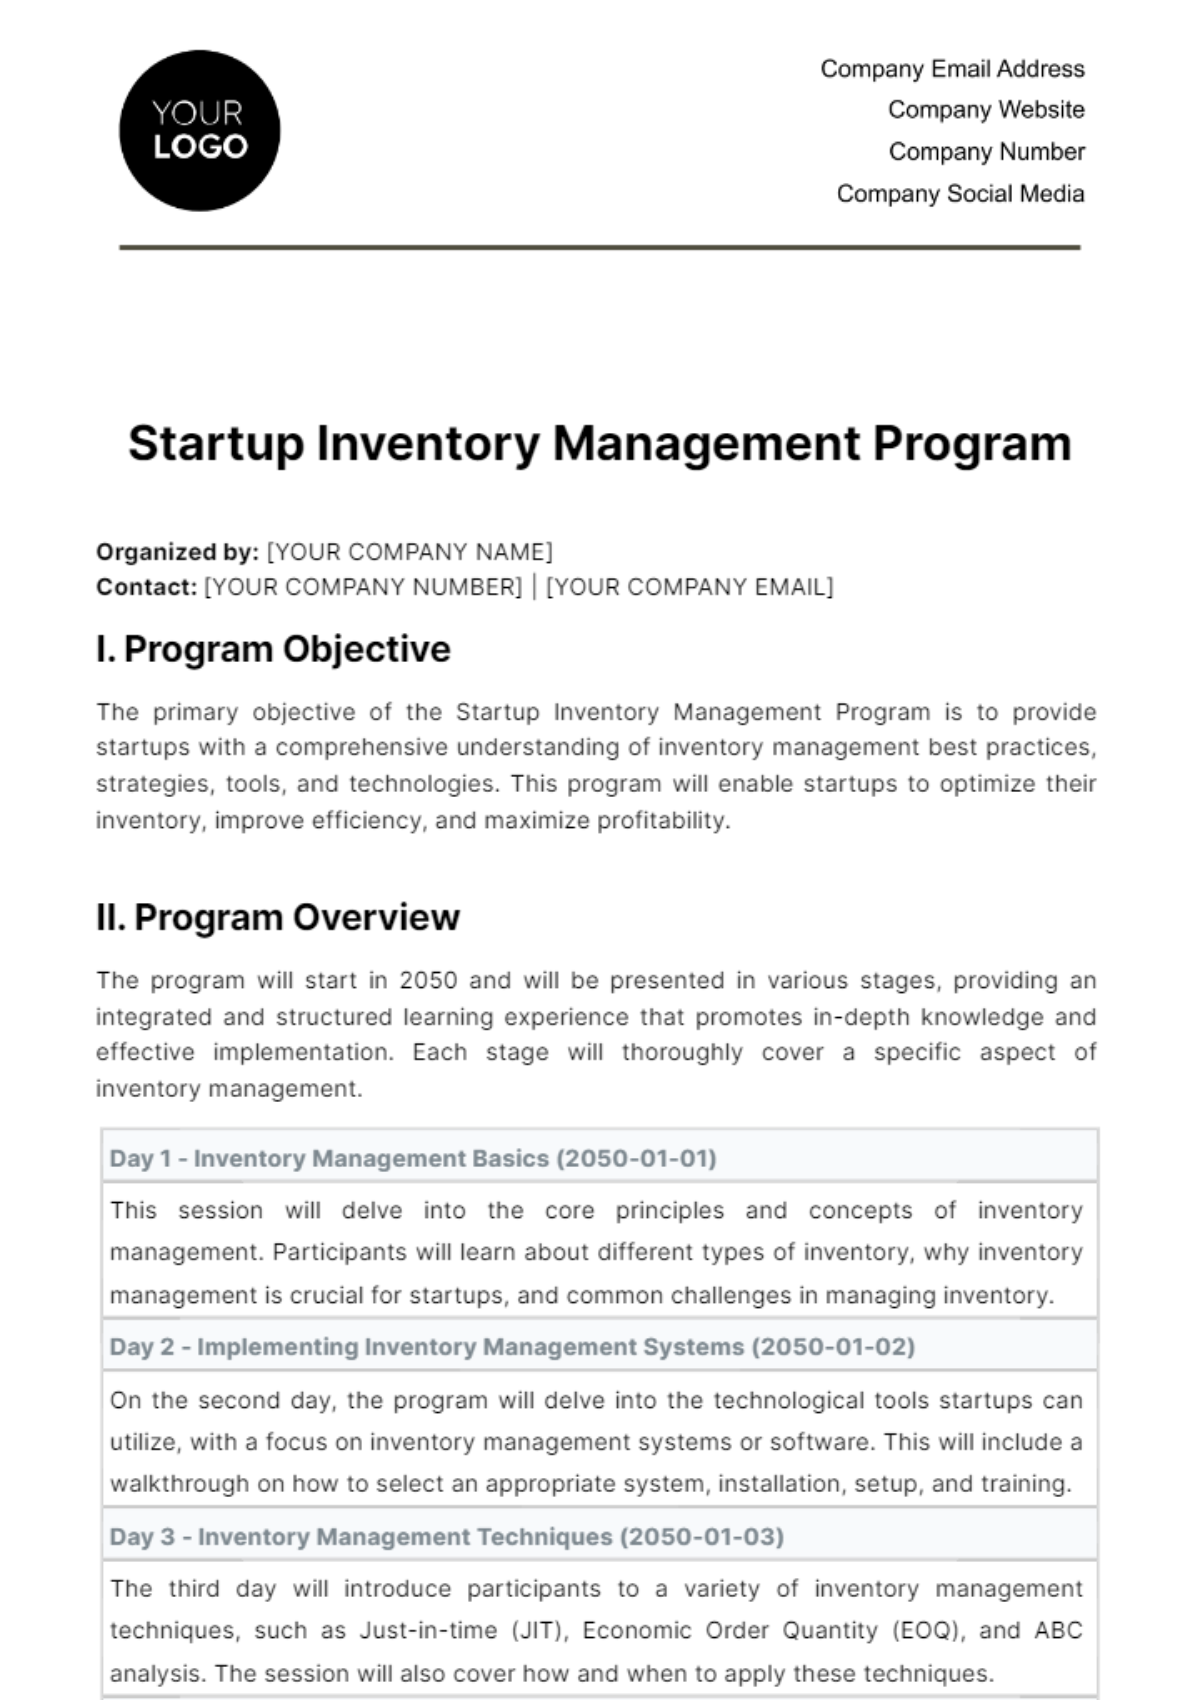 Startup Inventory Management Program Template